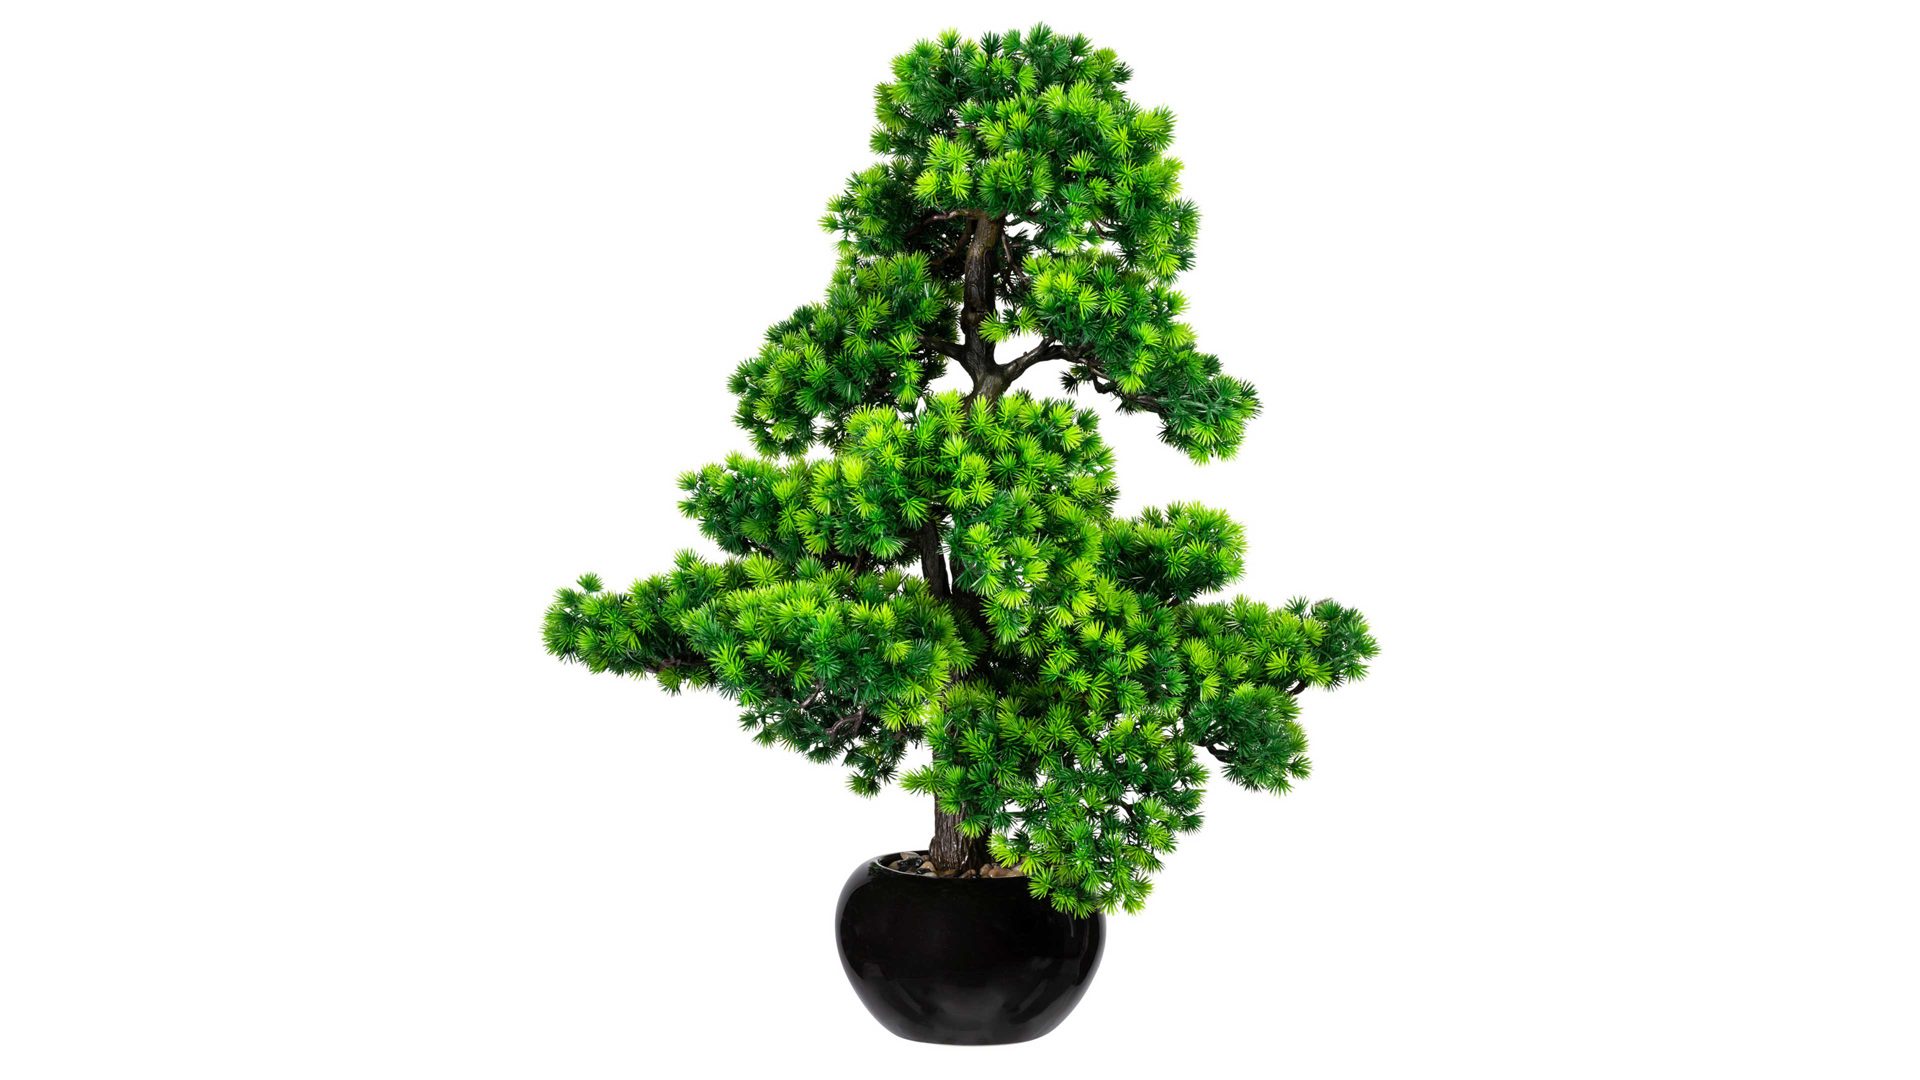 Pflanze Gasper aus Kunststoff in Grün Bonsai Lärche grüner Kunststoff & schwarzer Keramiktopf – Höhe ca. 70 cm